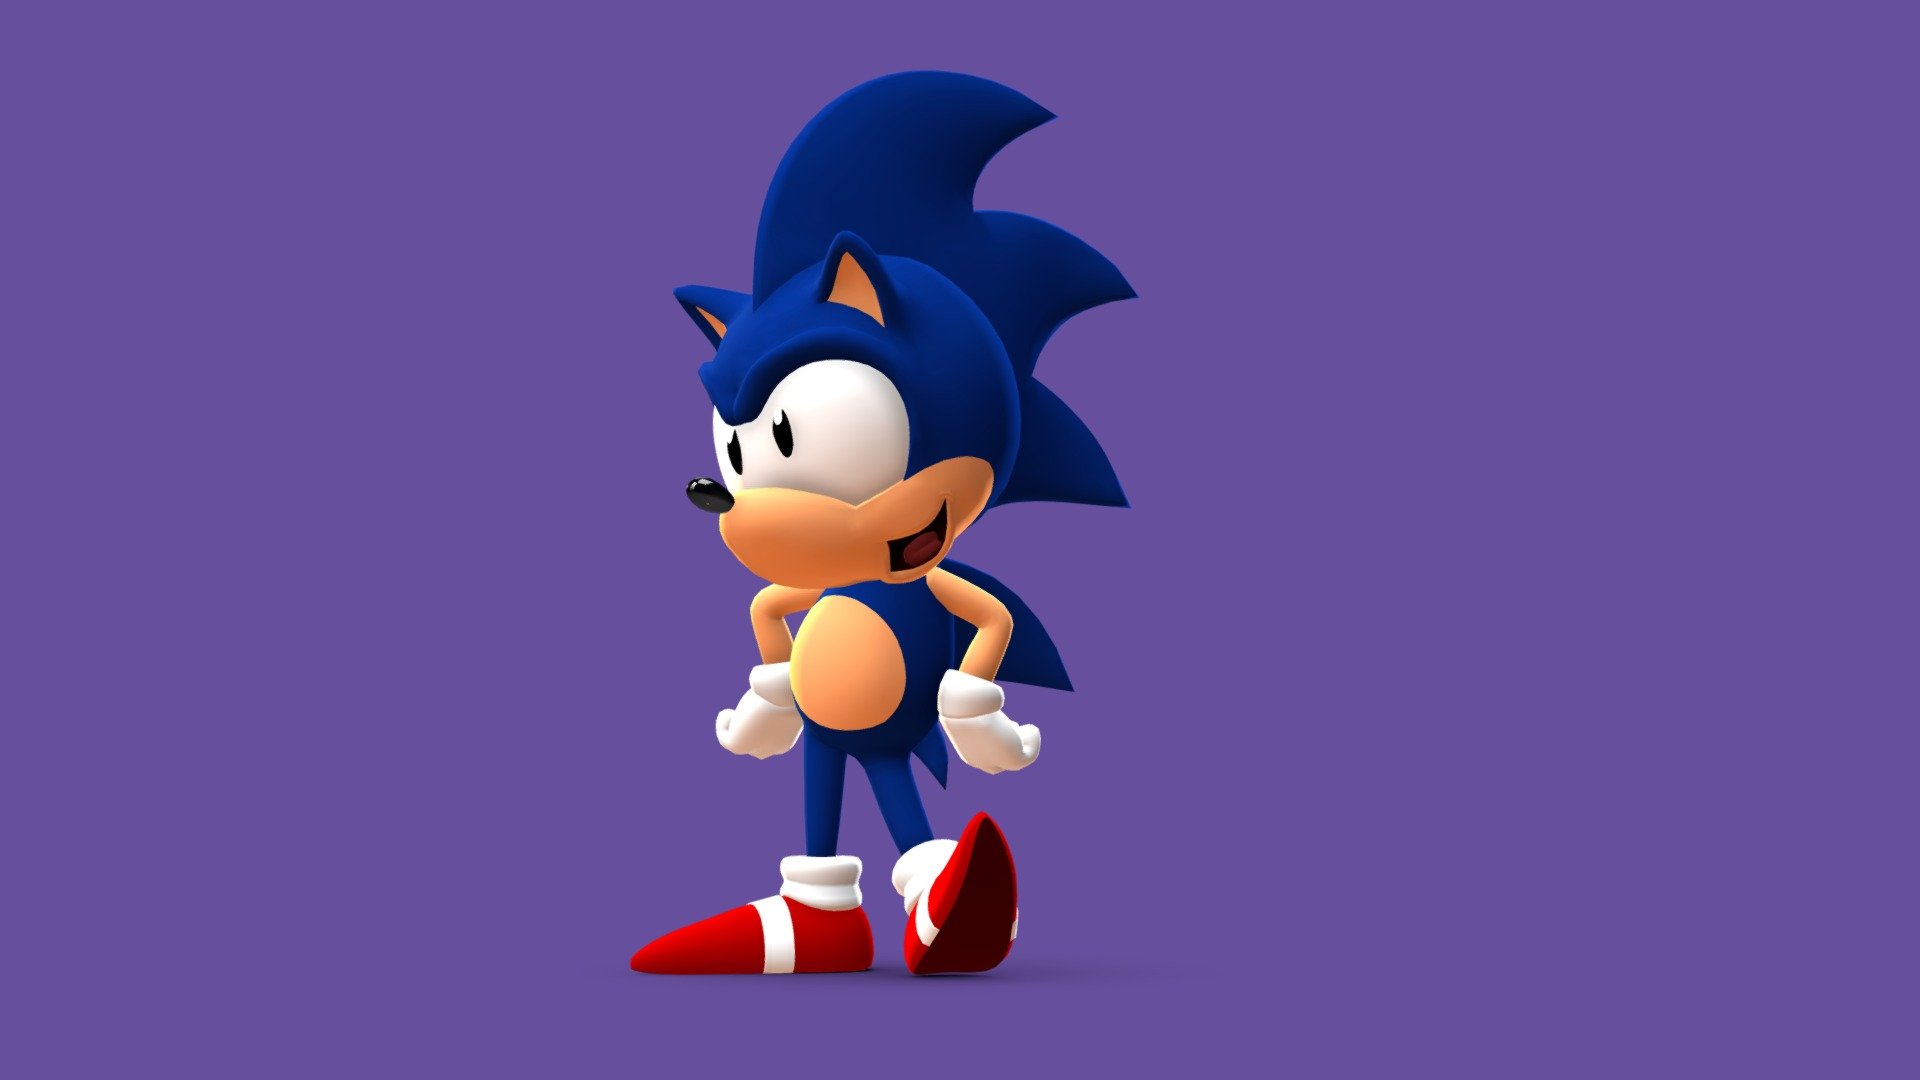 Sonic the Hedgehog (SatAM)